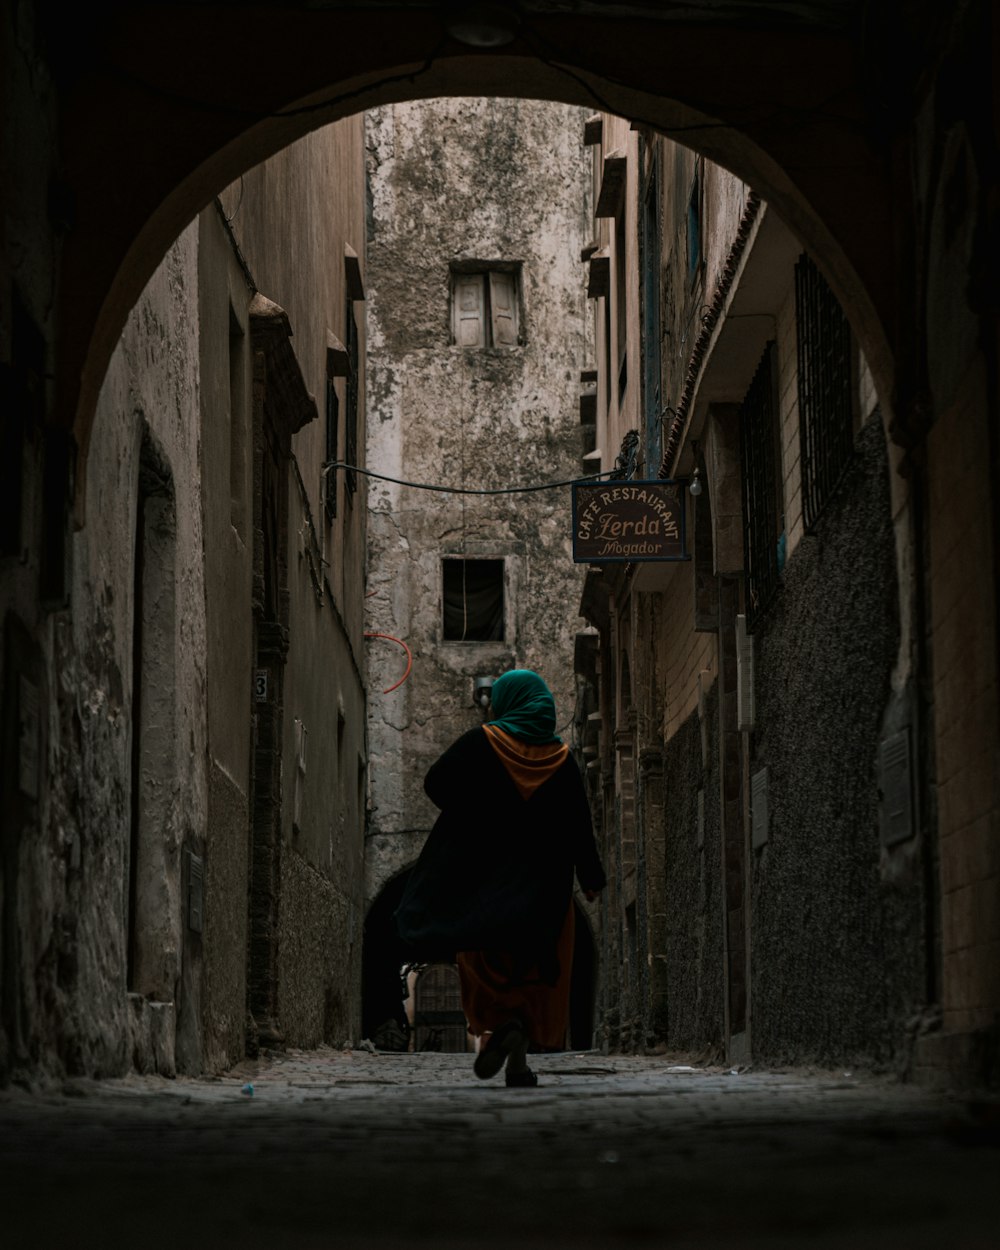 a woman walking down a narrow alley way